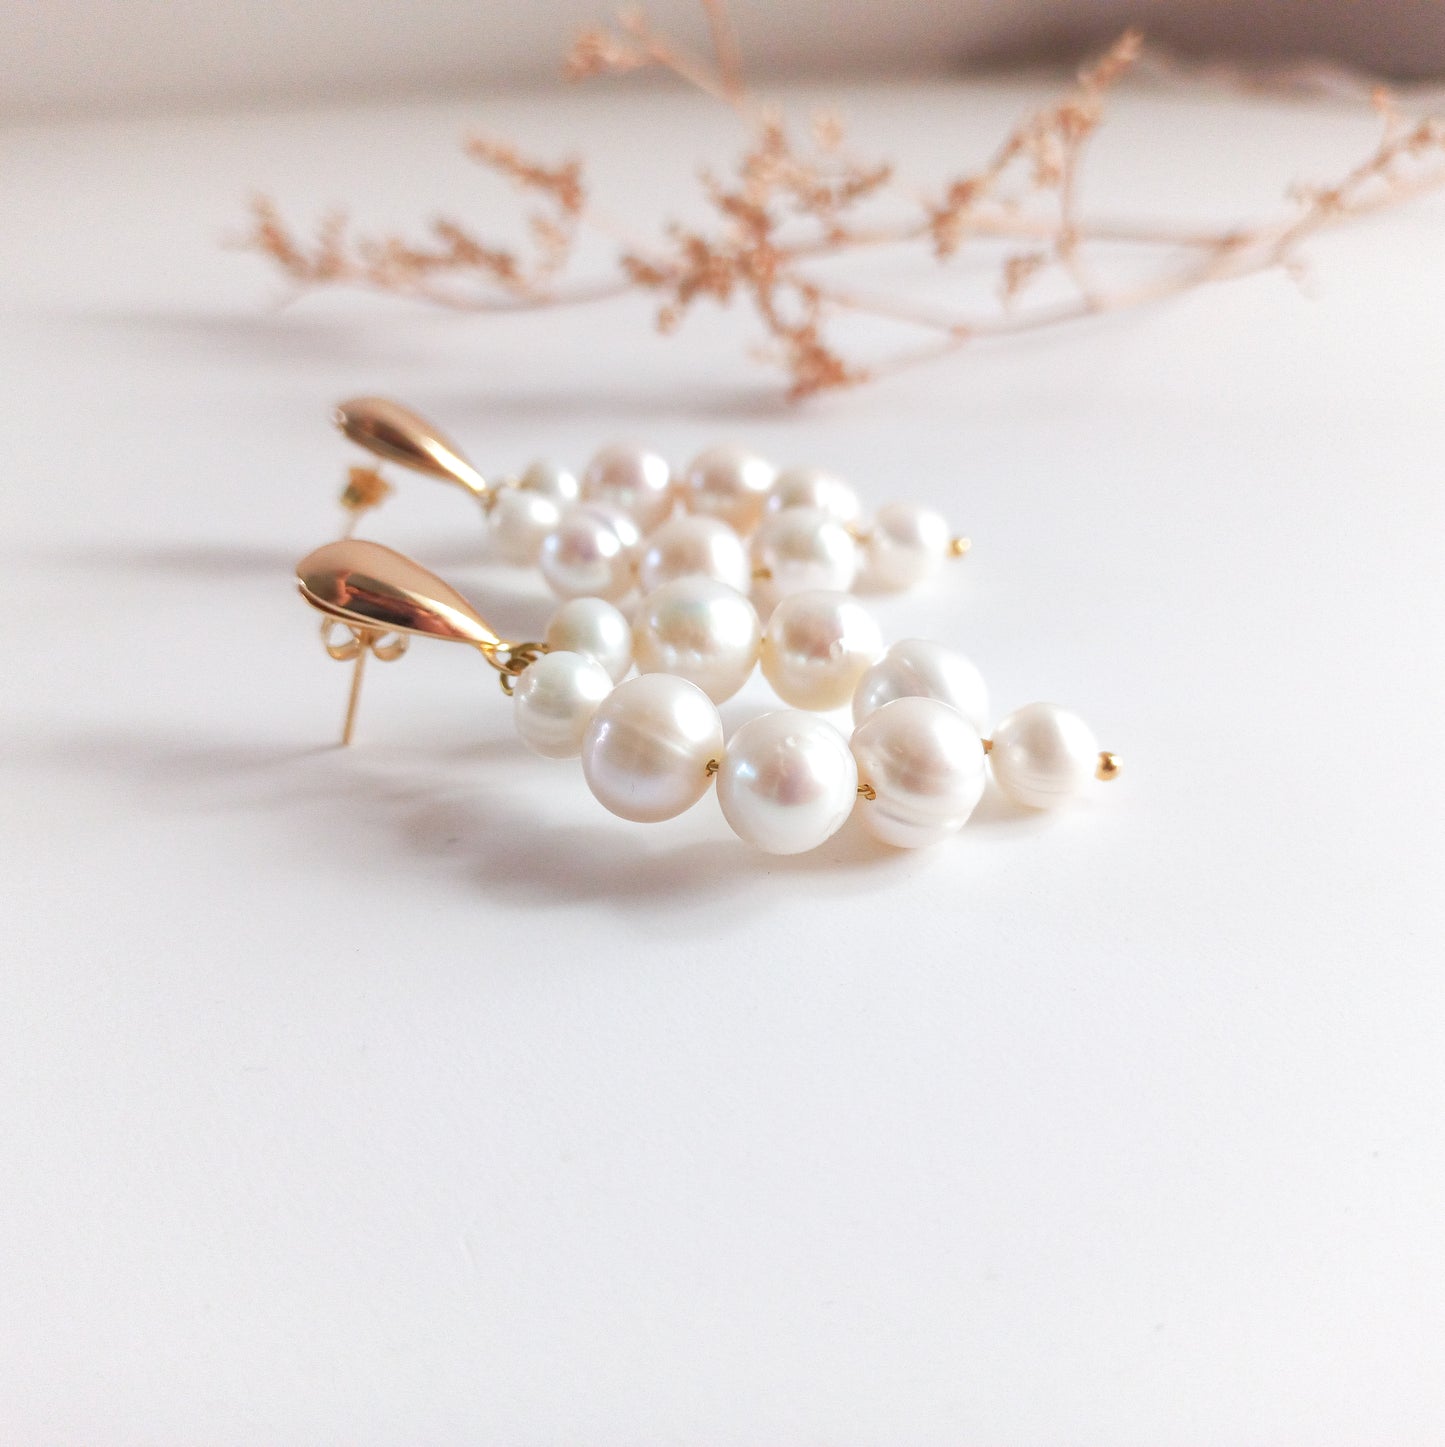 Bridal bloom - Classic Chandelier Fresh Water Pearls 18K gold plated teardrop post